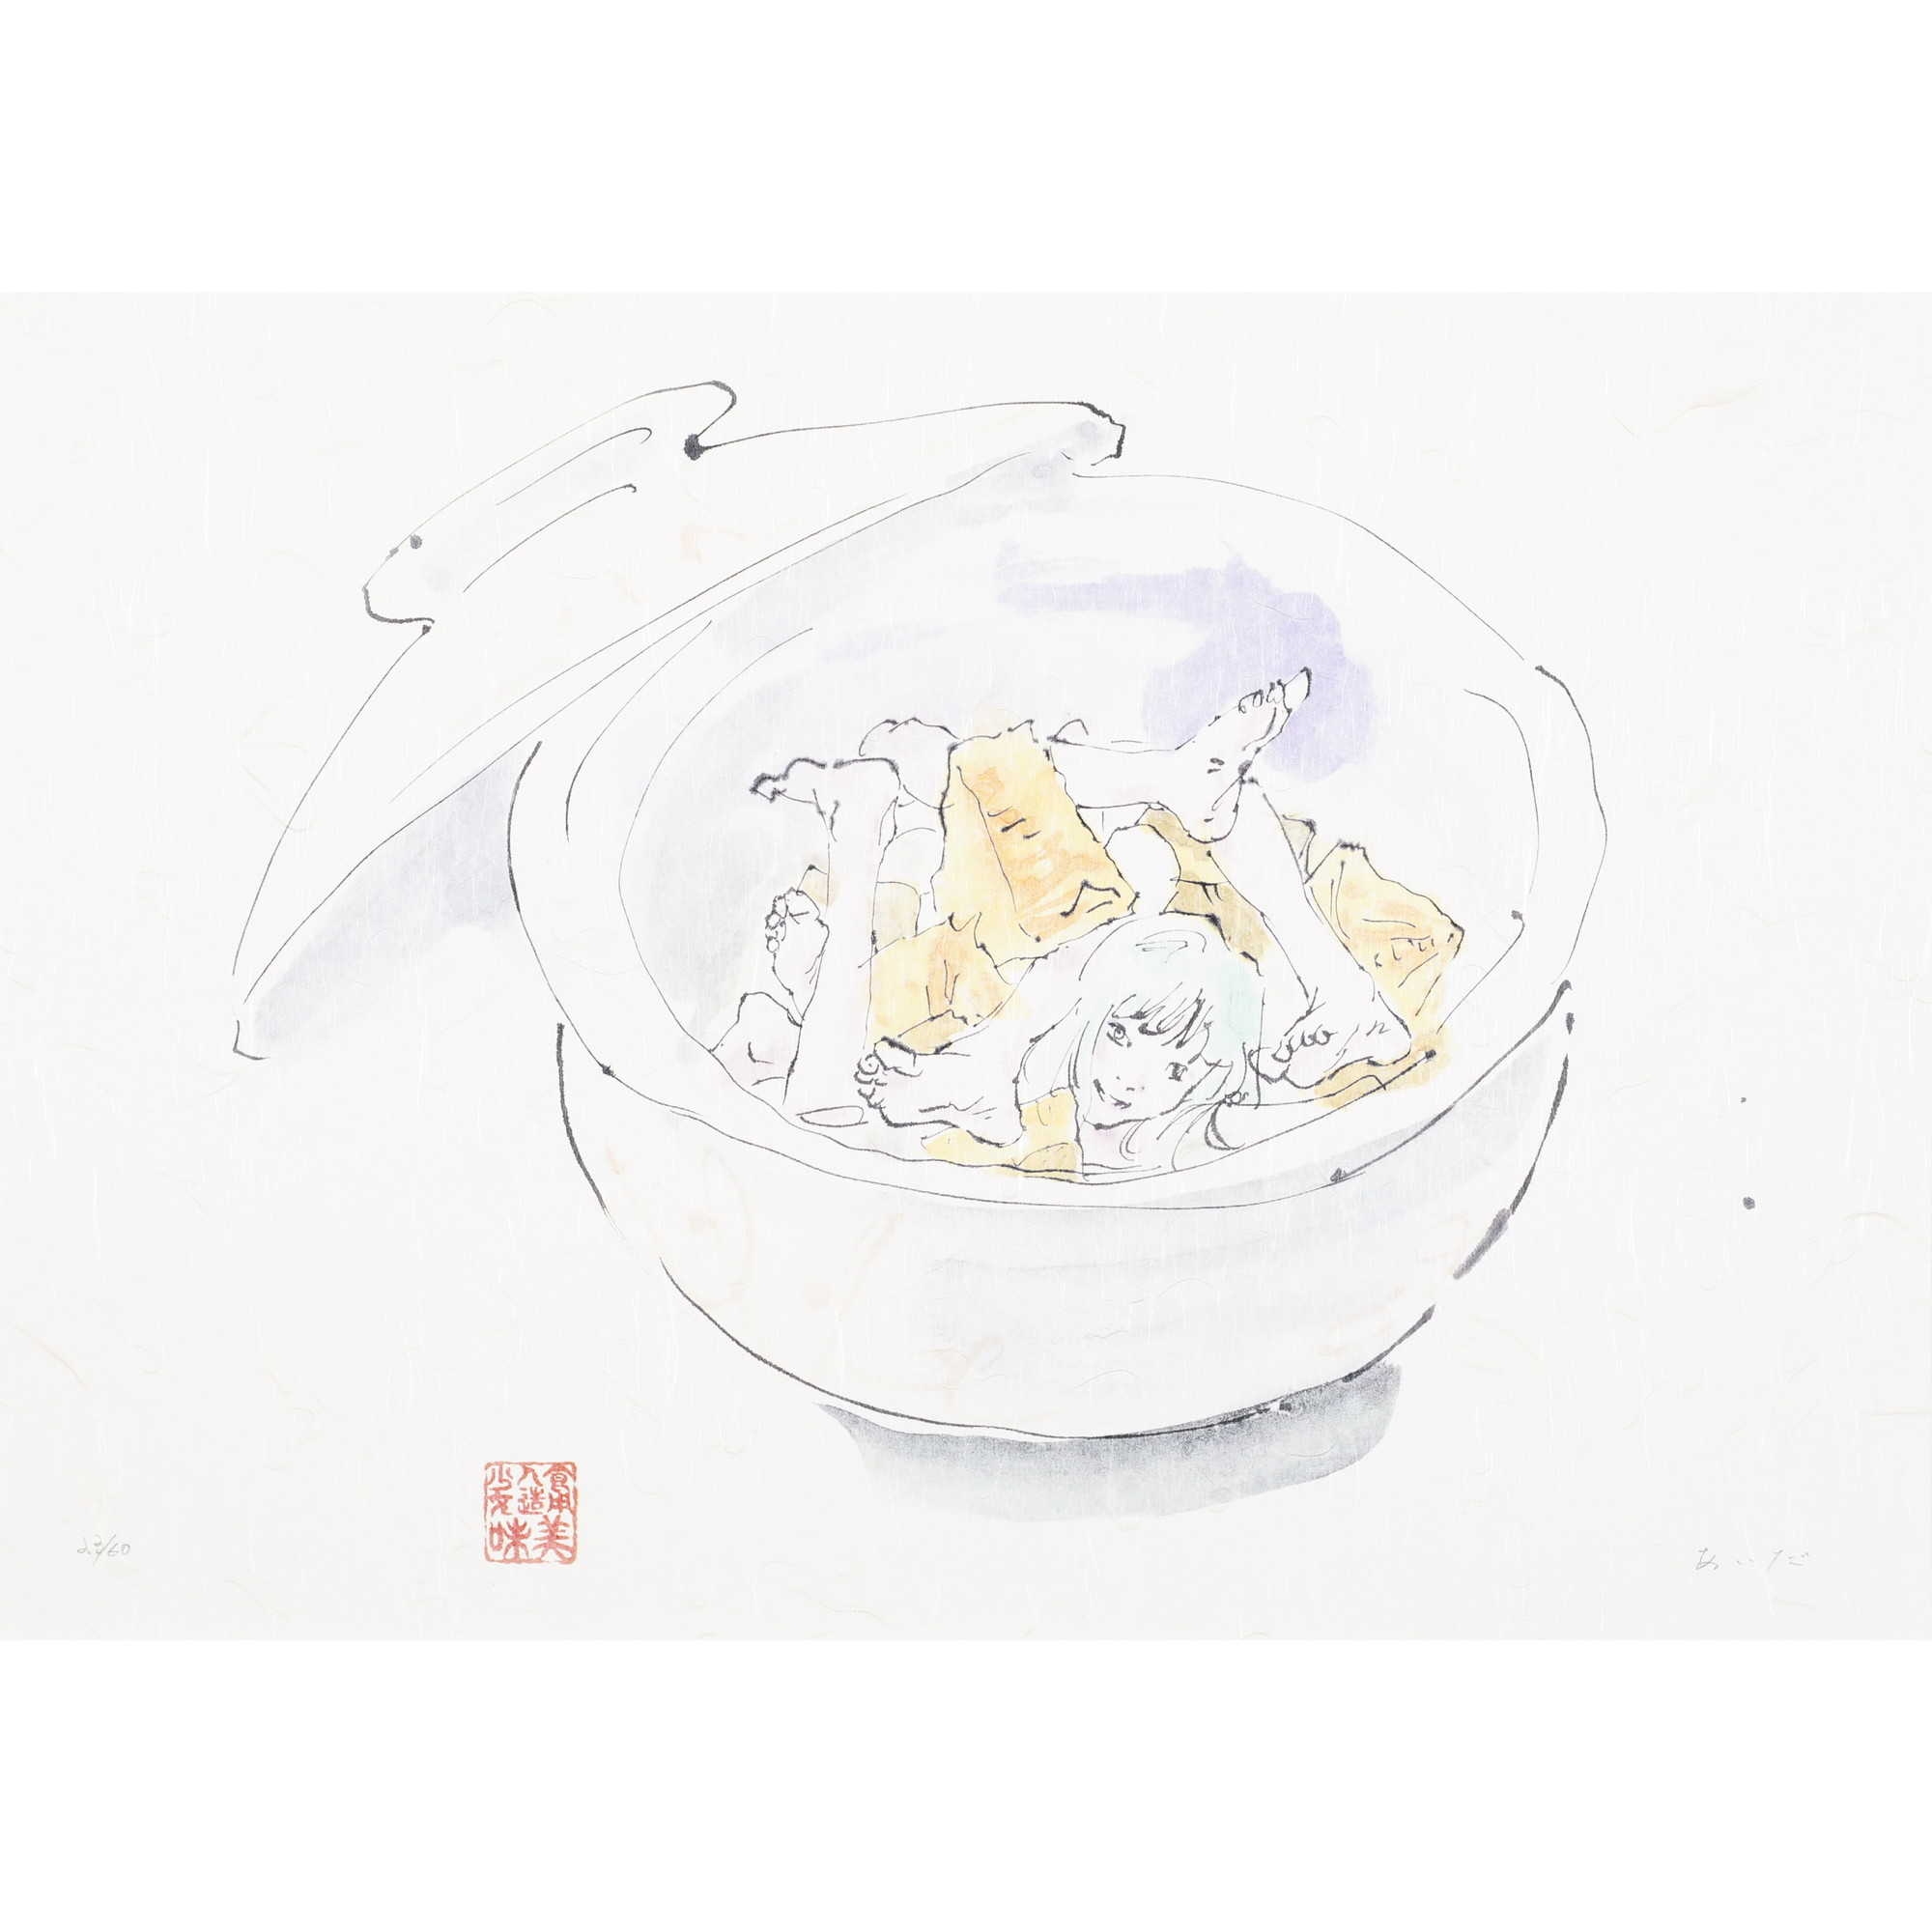 EDIBLE ARTIFICIAL GIRL “MIMI-CHAN” by Makoto Aida, 2001